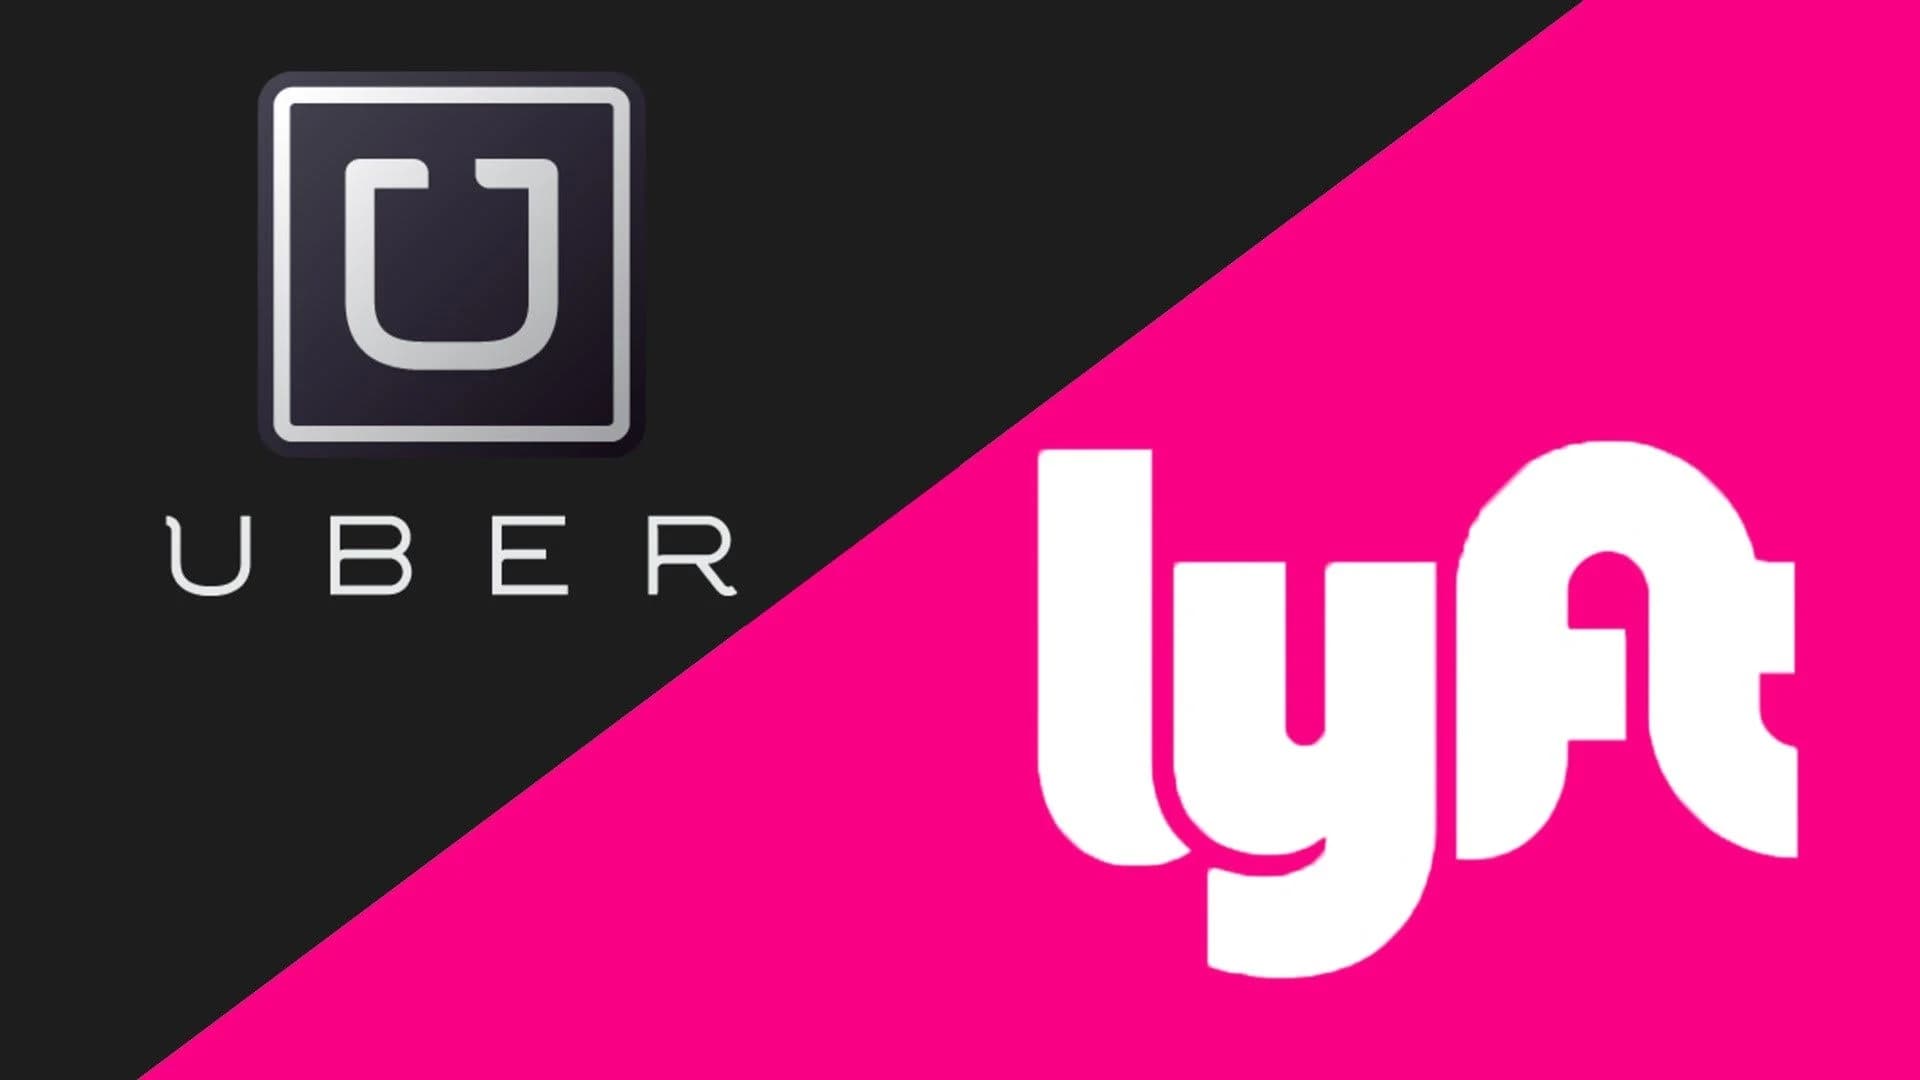 Uber, Lyft to offer rewards programs similar to airlines